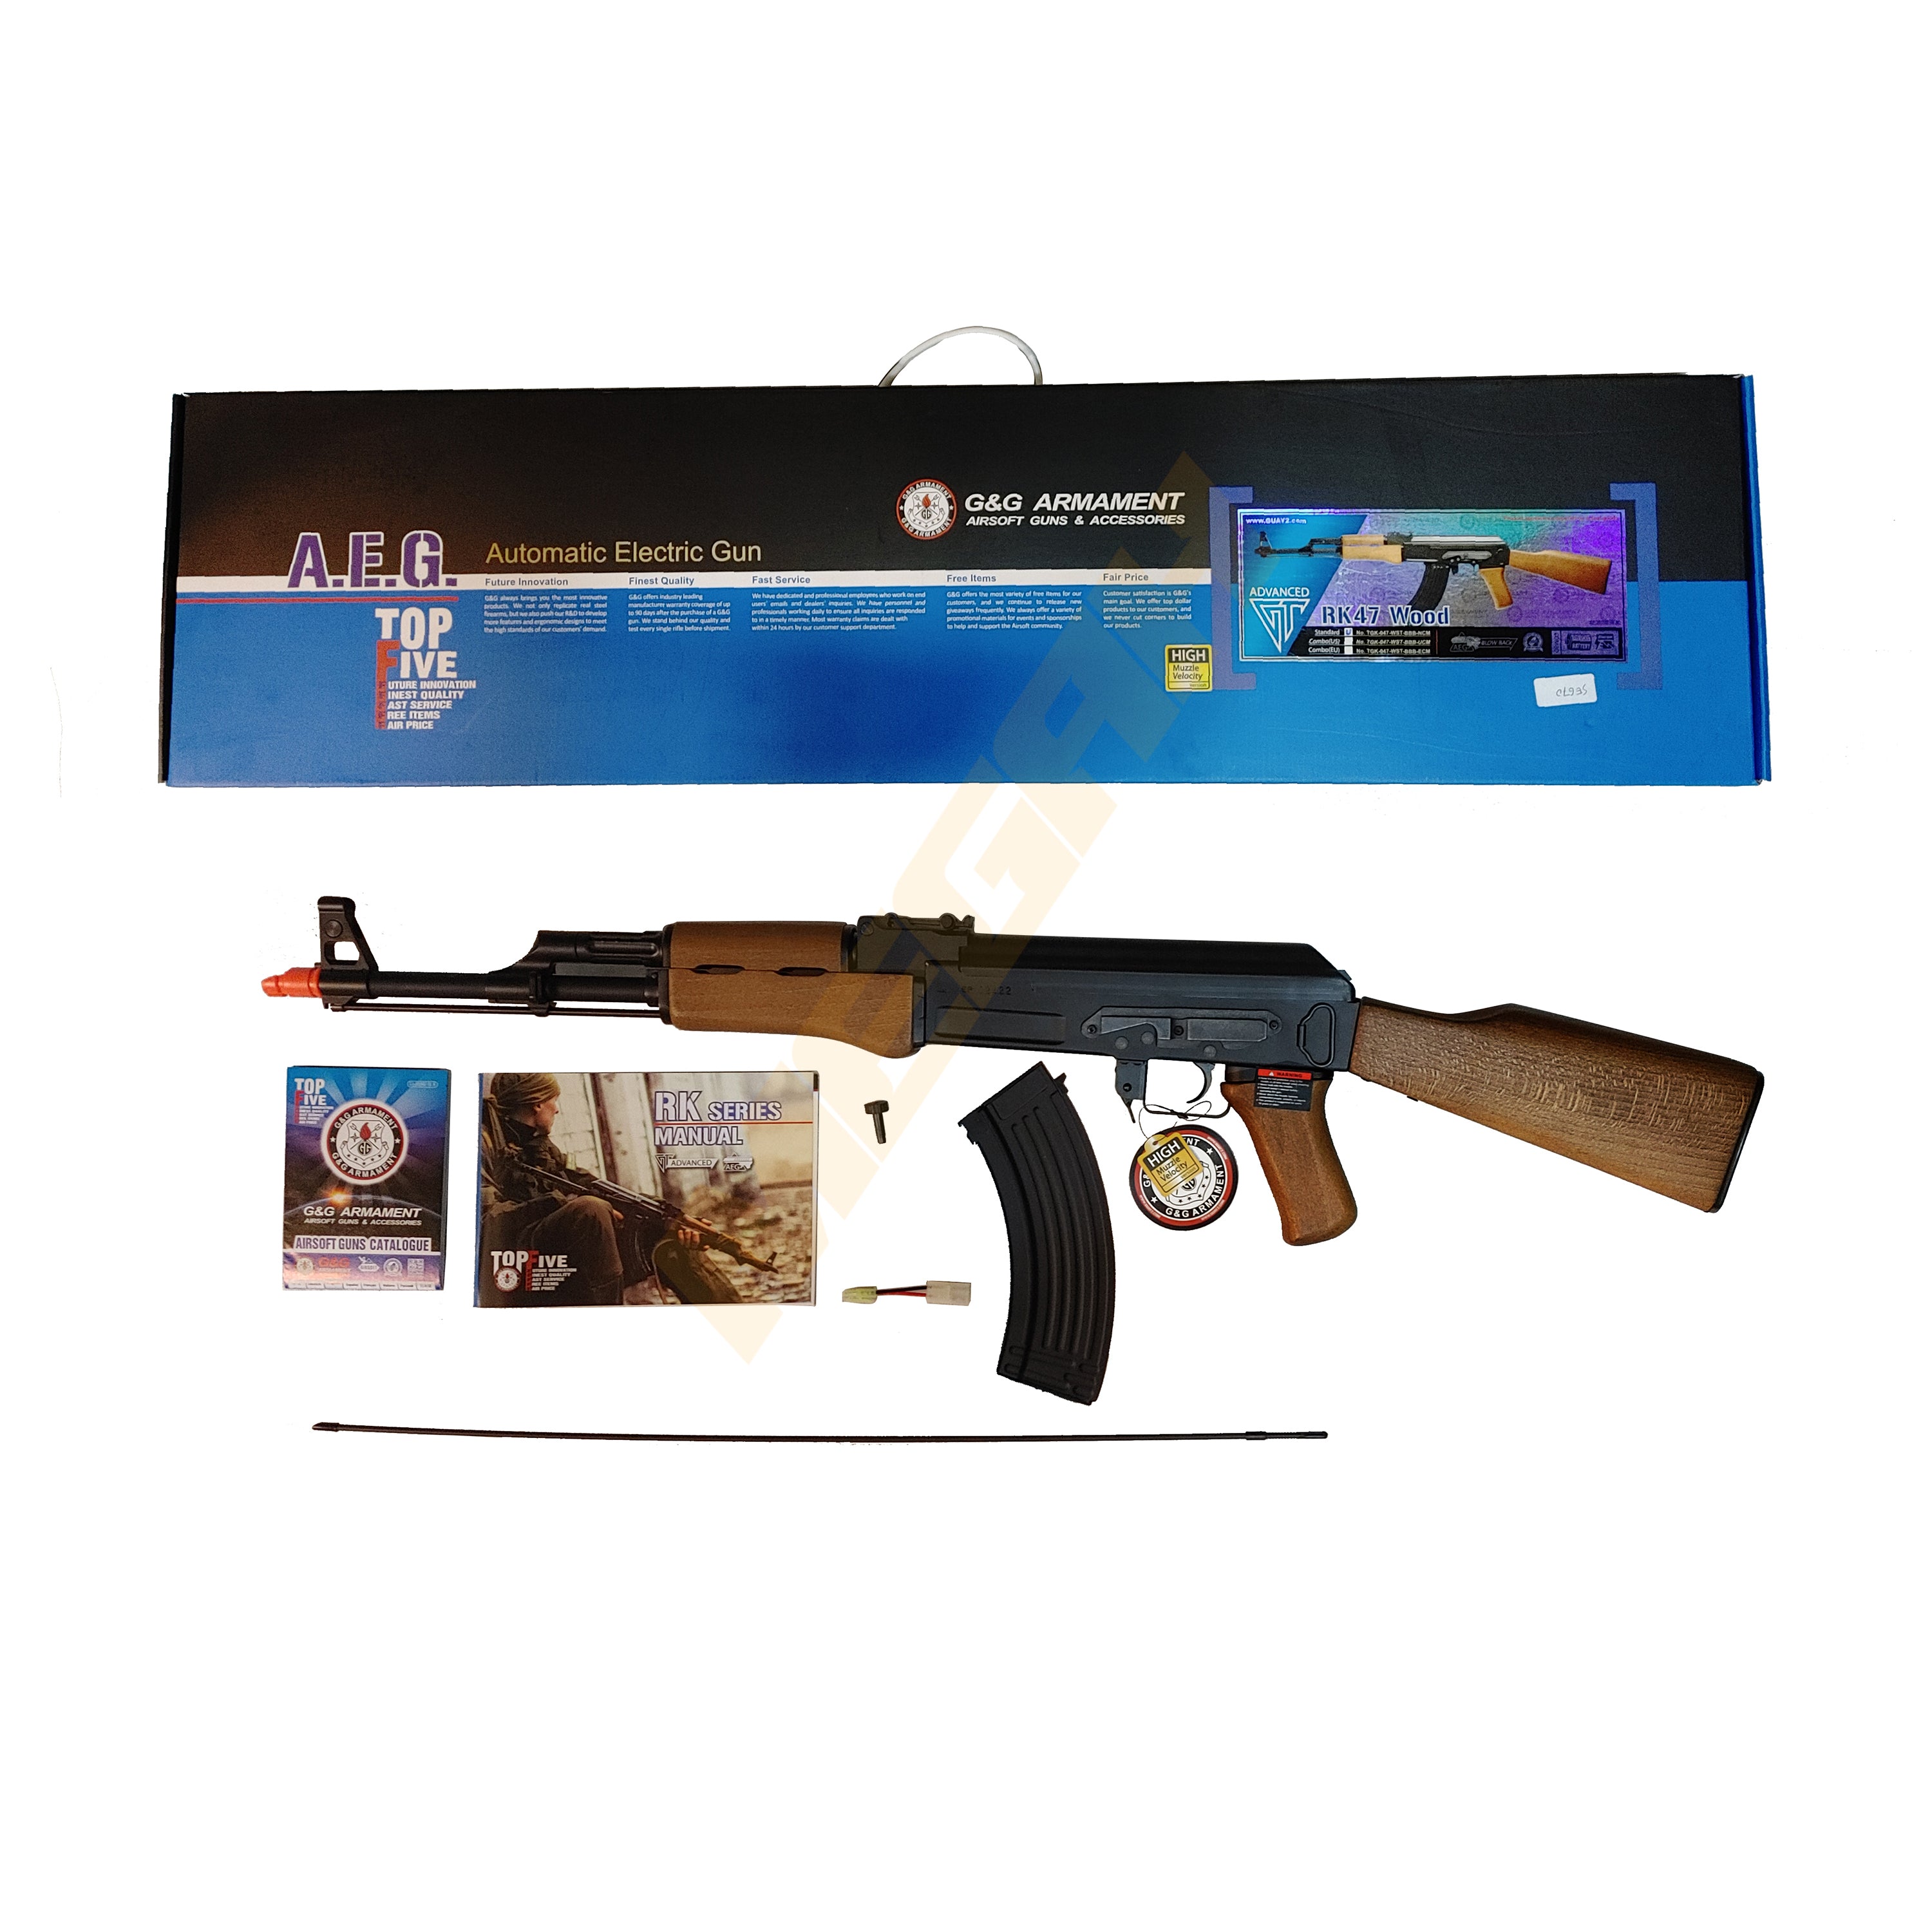 G&G RK47 AEG REAL WOOD - AIRSOFT GUN (SE670)